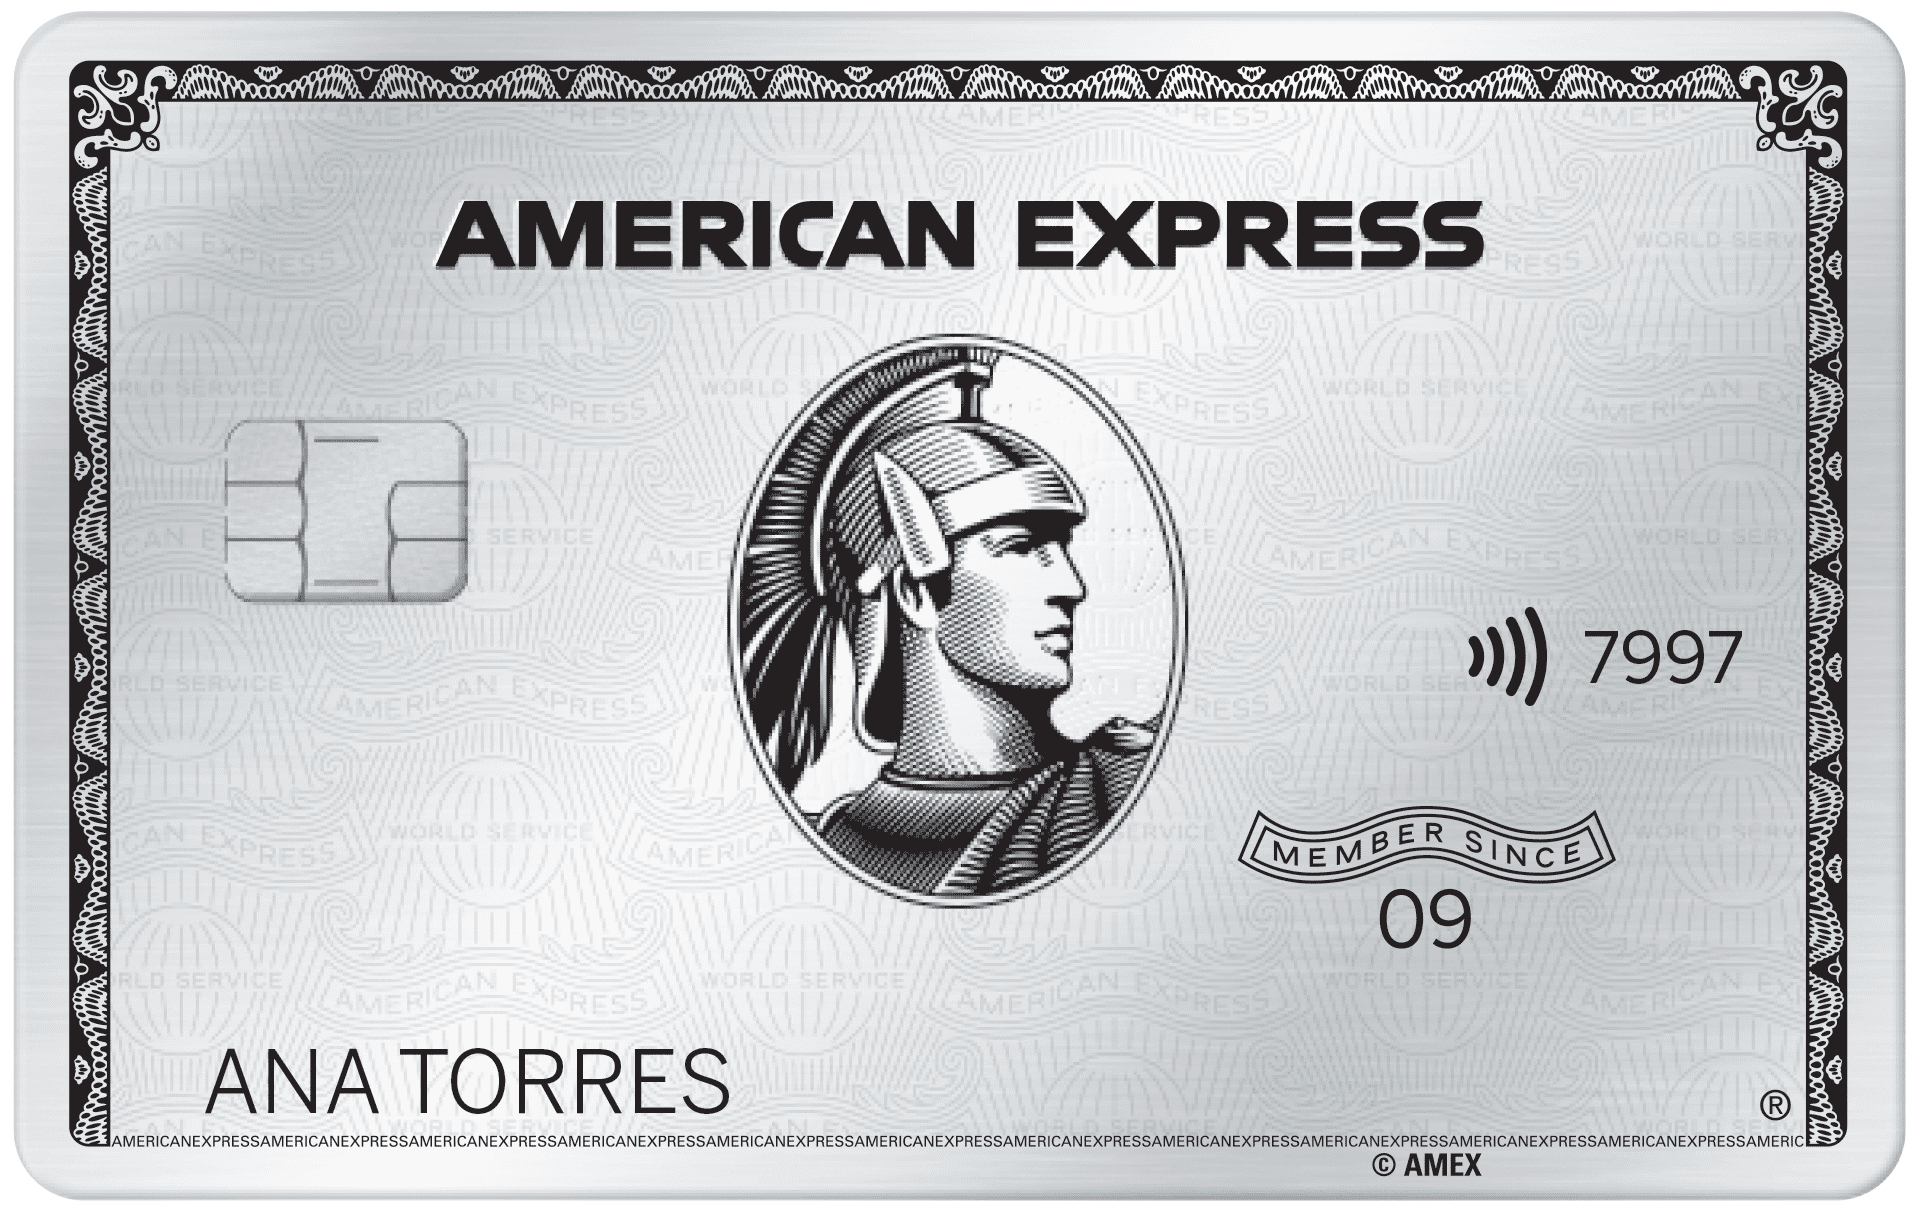 The Platinum Card American Express